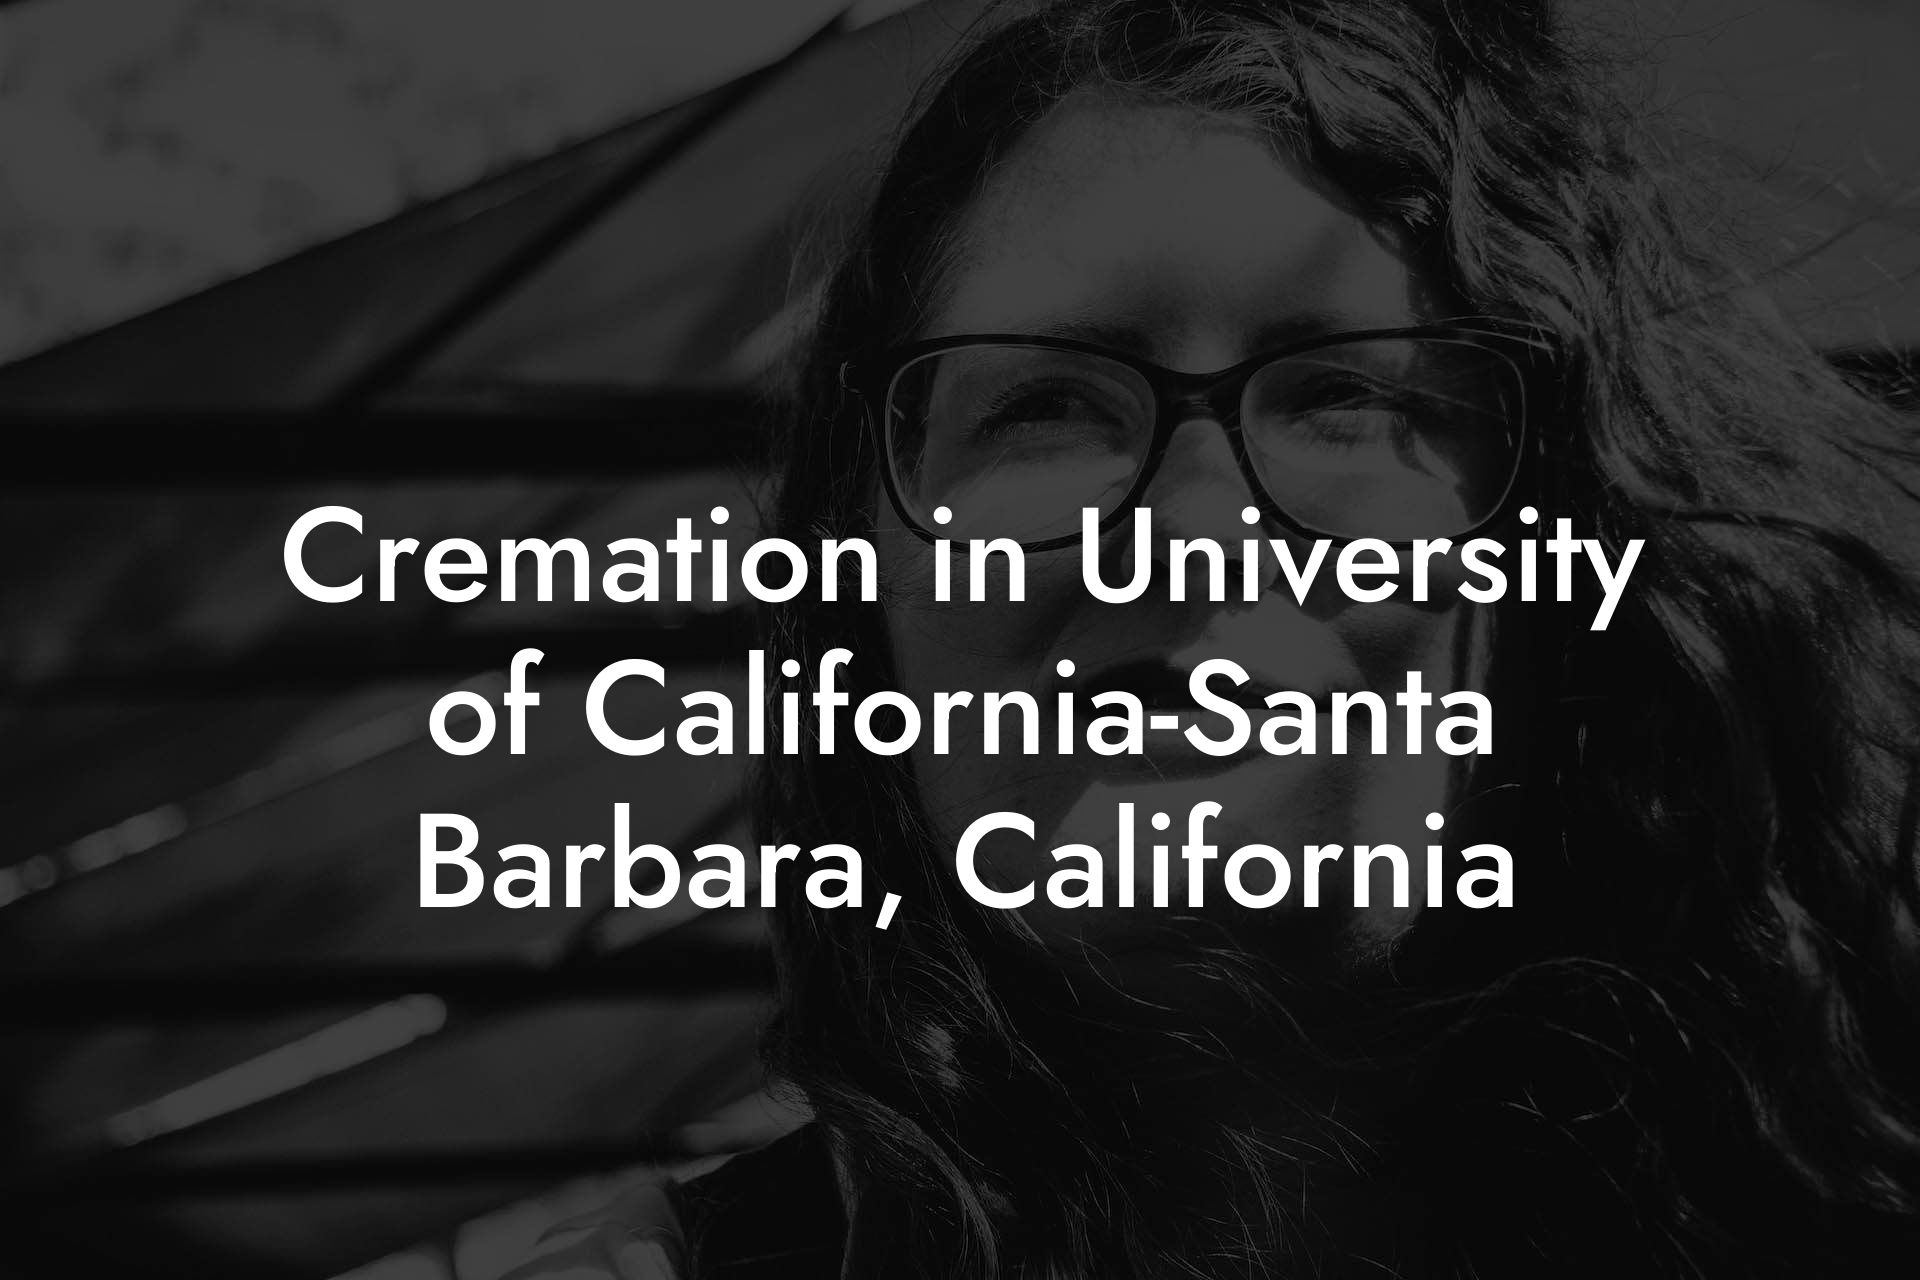 Cremation in University of California-Santa Barbara, California